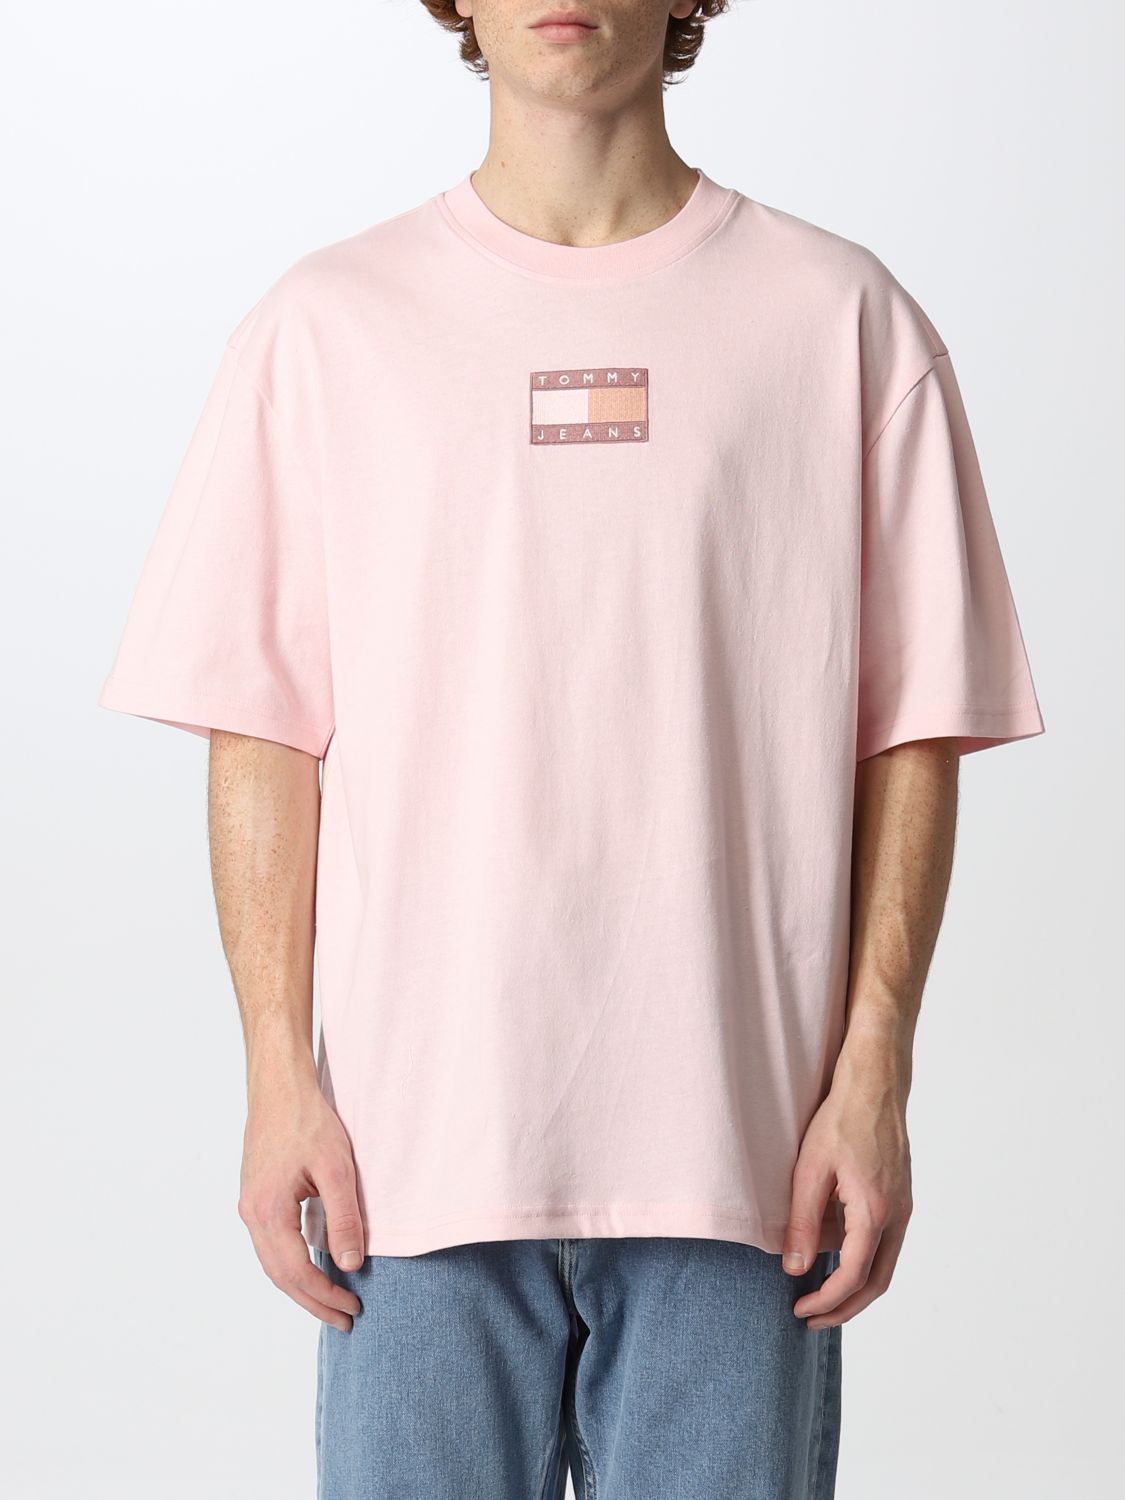 TOMMY HILFIGER: Camiseta para hombre, Rosa Camiseta Tommy Hilfiger DM0DM13327TH9 en GIGLIO.COM